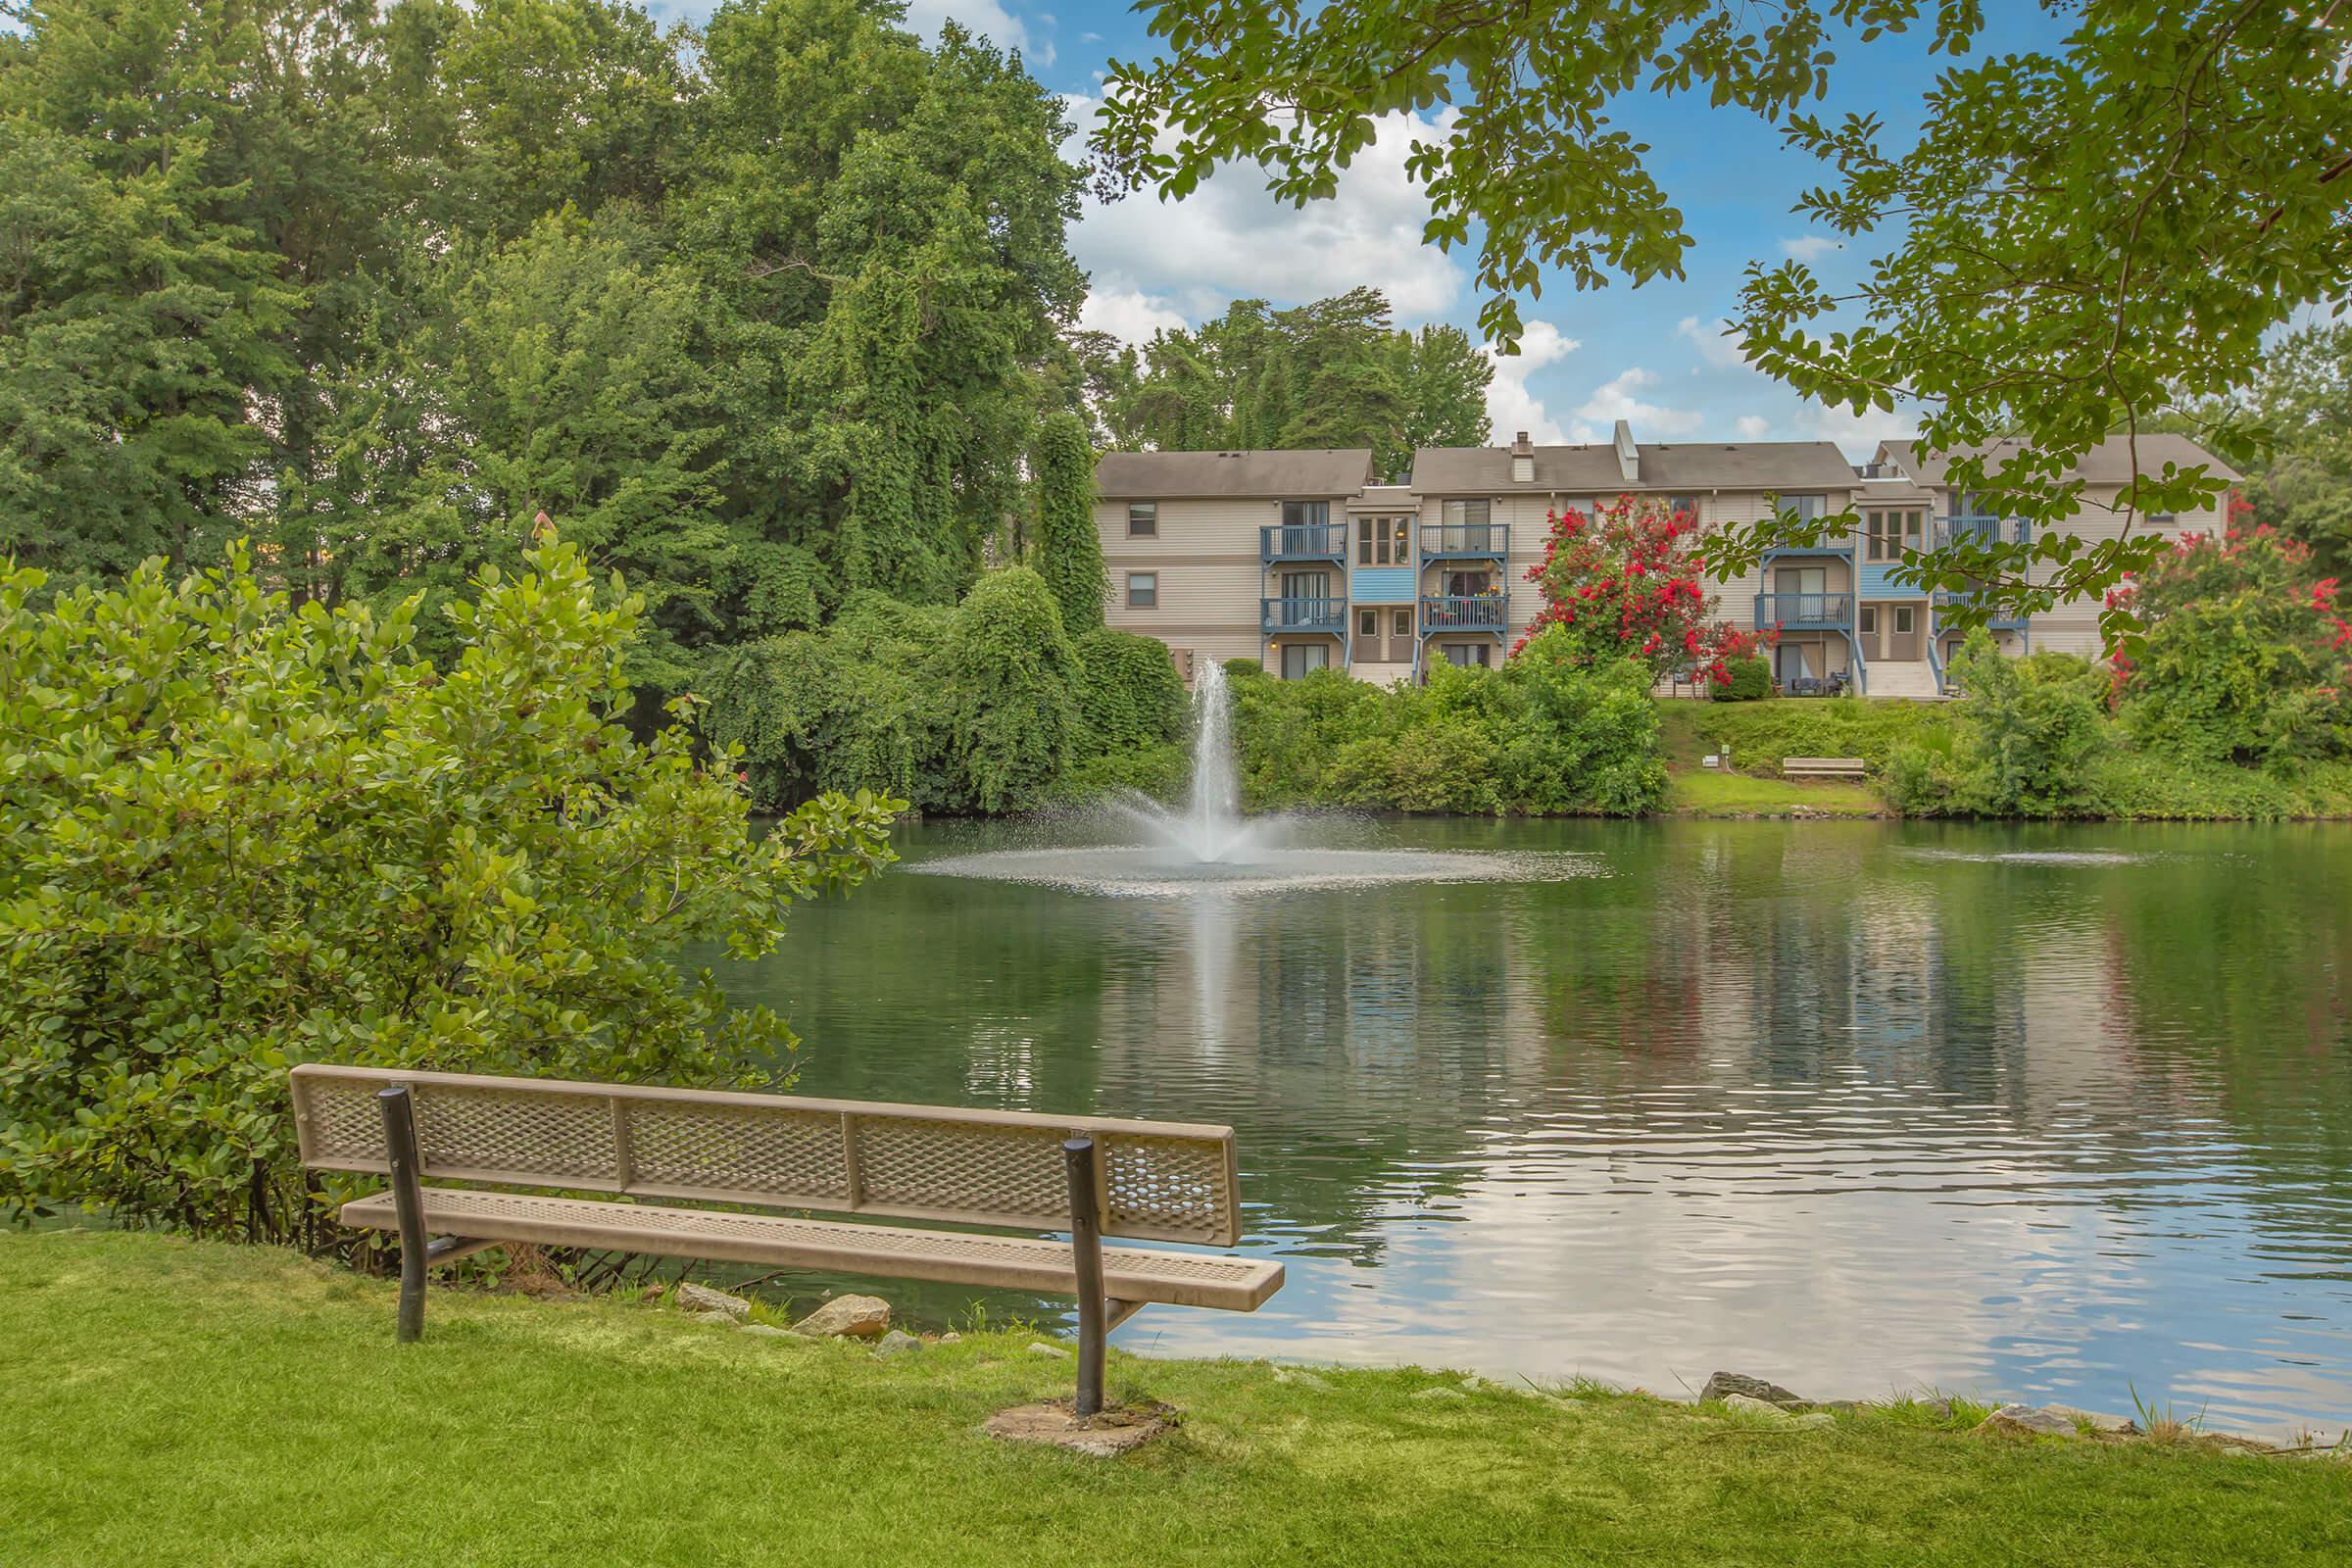 Five Stocked Lakes and New Fishing Deck - Edgewater Village Apartments - Greensboro - North Carolina